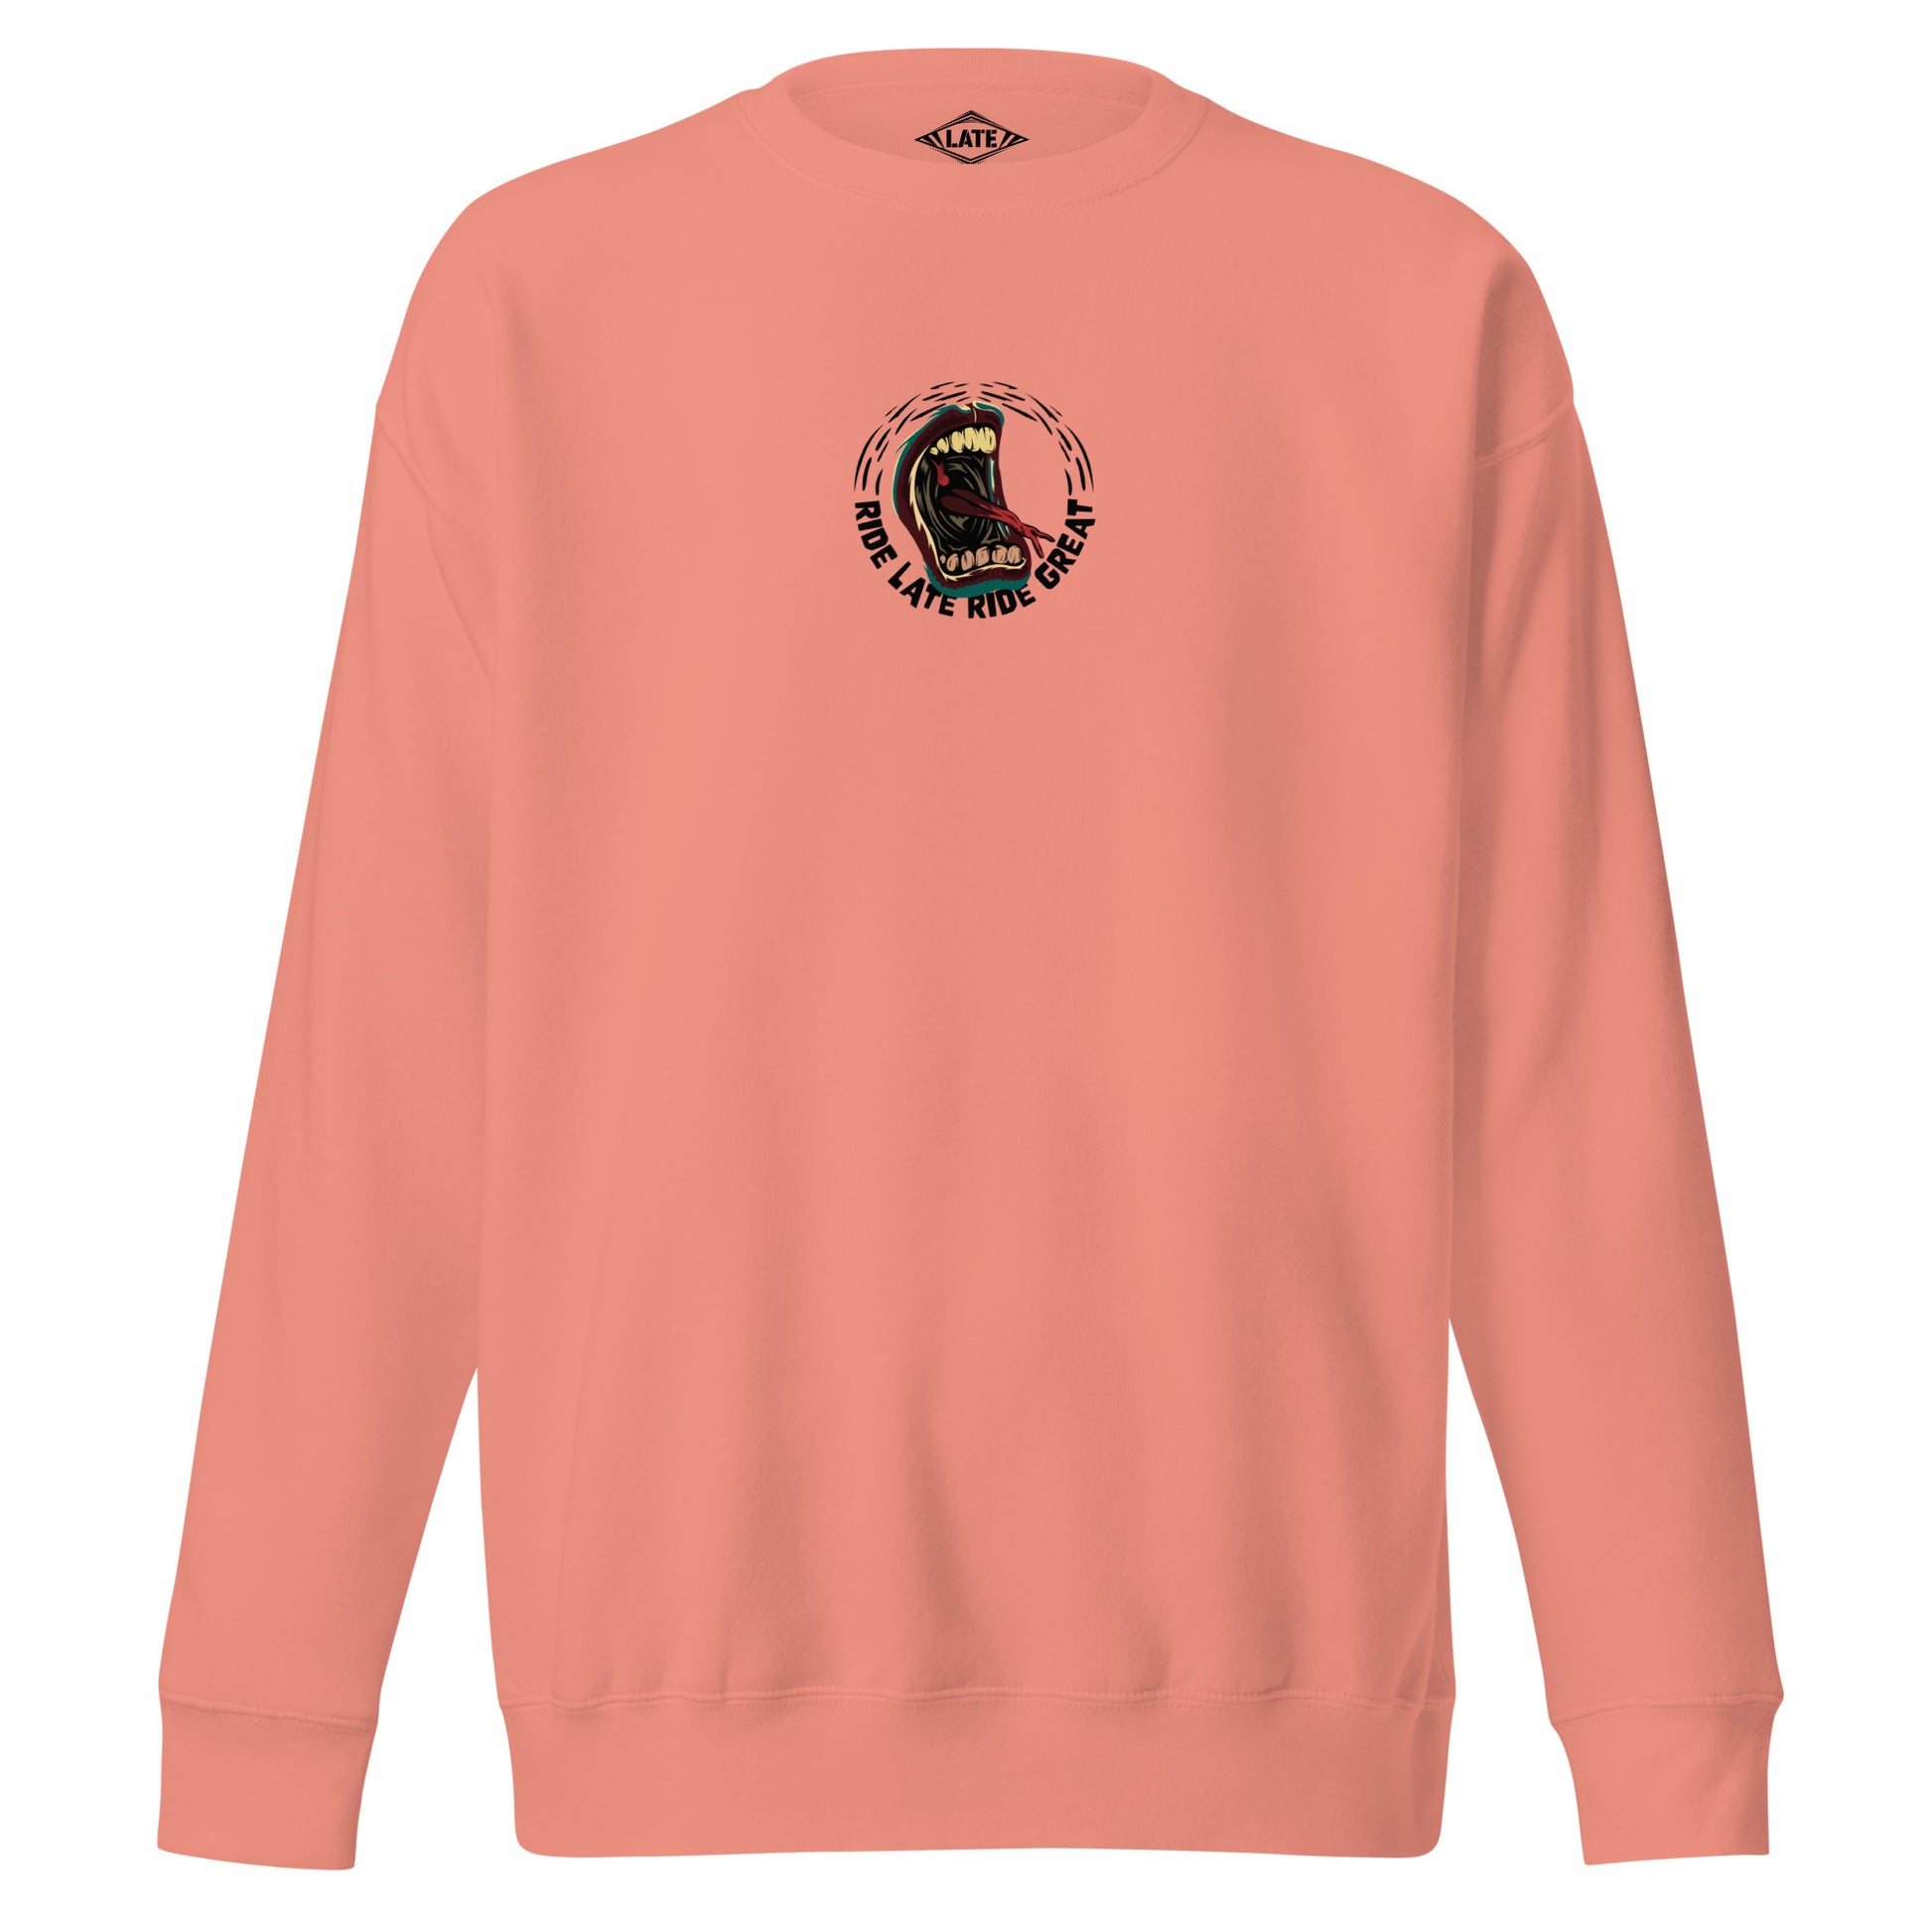 Sweatshirt Ride Late Live Great bouche style santacruz skateboard, marque Late, face, couleur rose